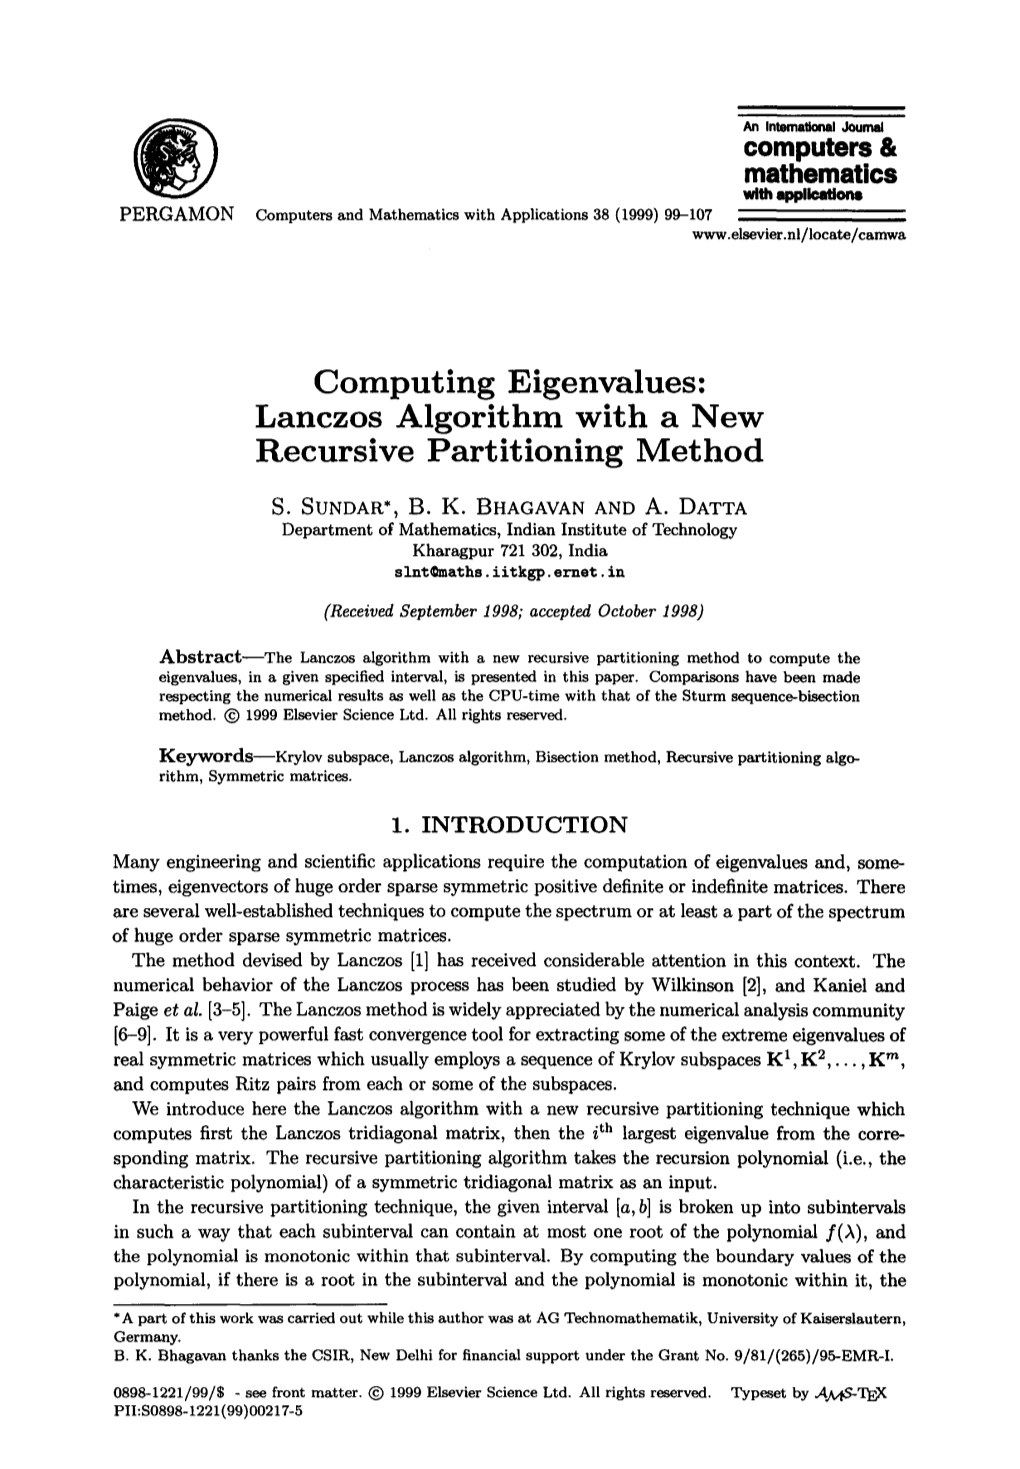 Computing Eigenvalues: Lanczos Algorithm with a New Recursive Partitioning Method